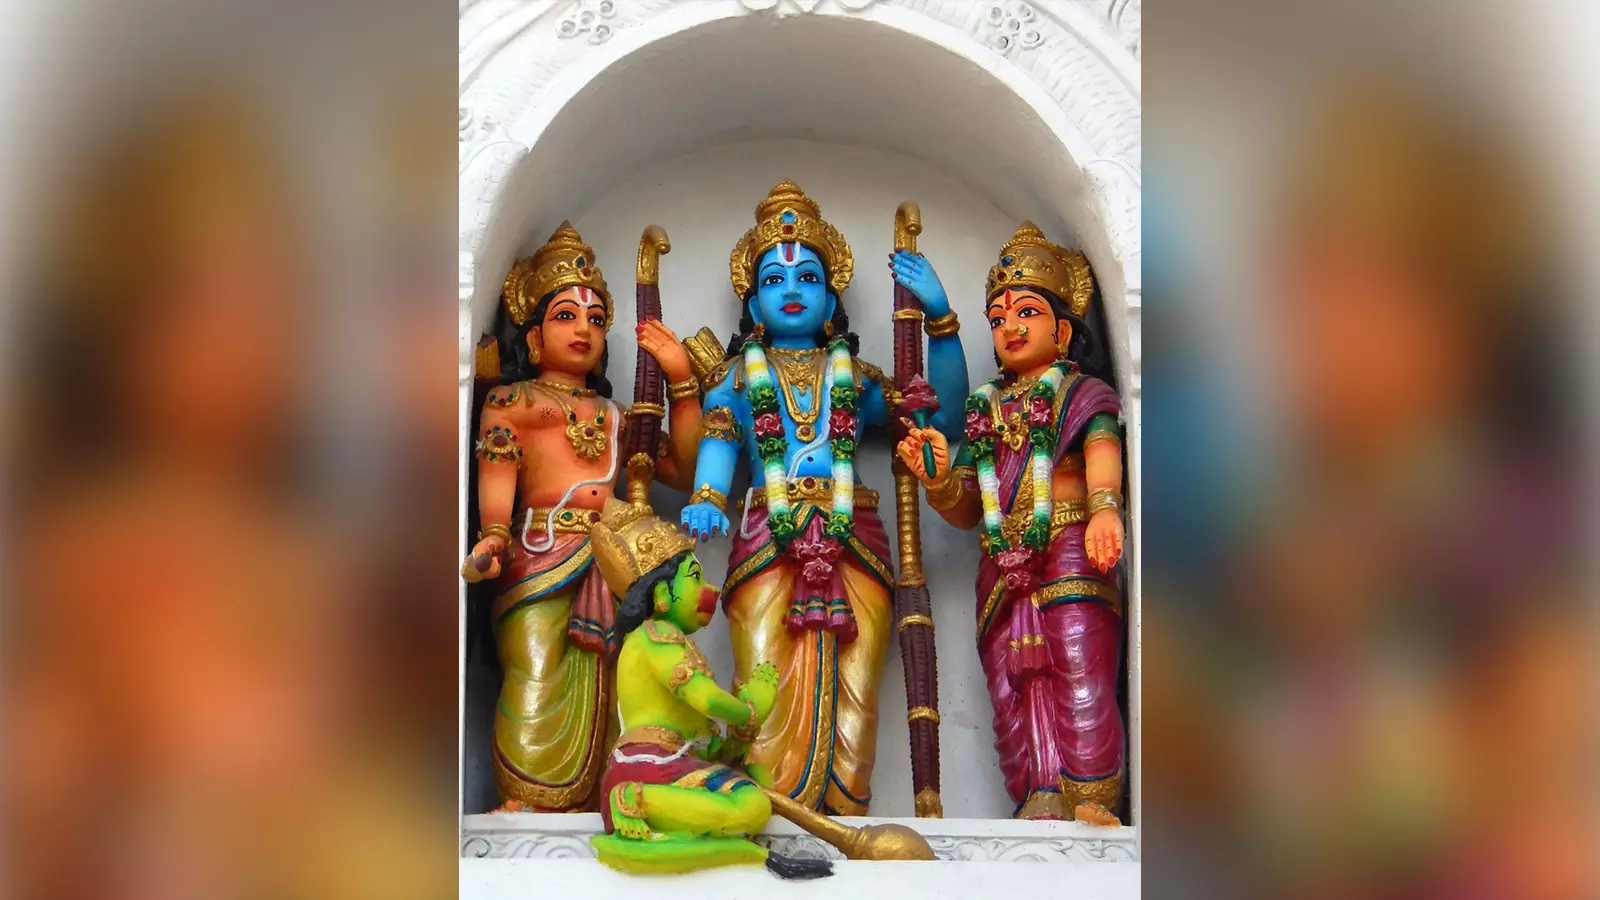 Ayodhya Ram Mandir | God, temple, prayer, and all things personal